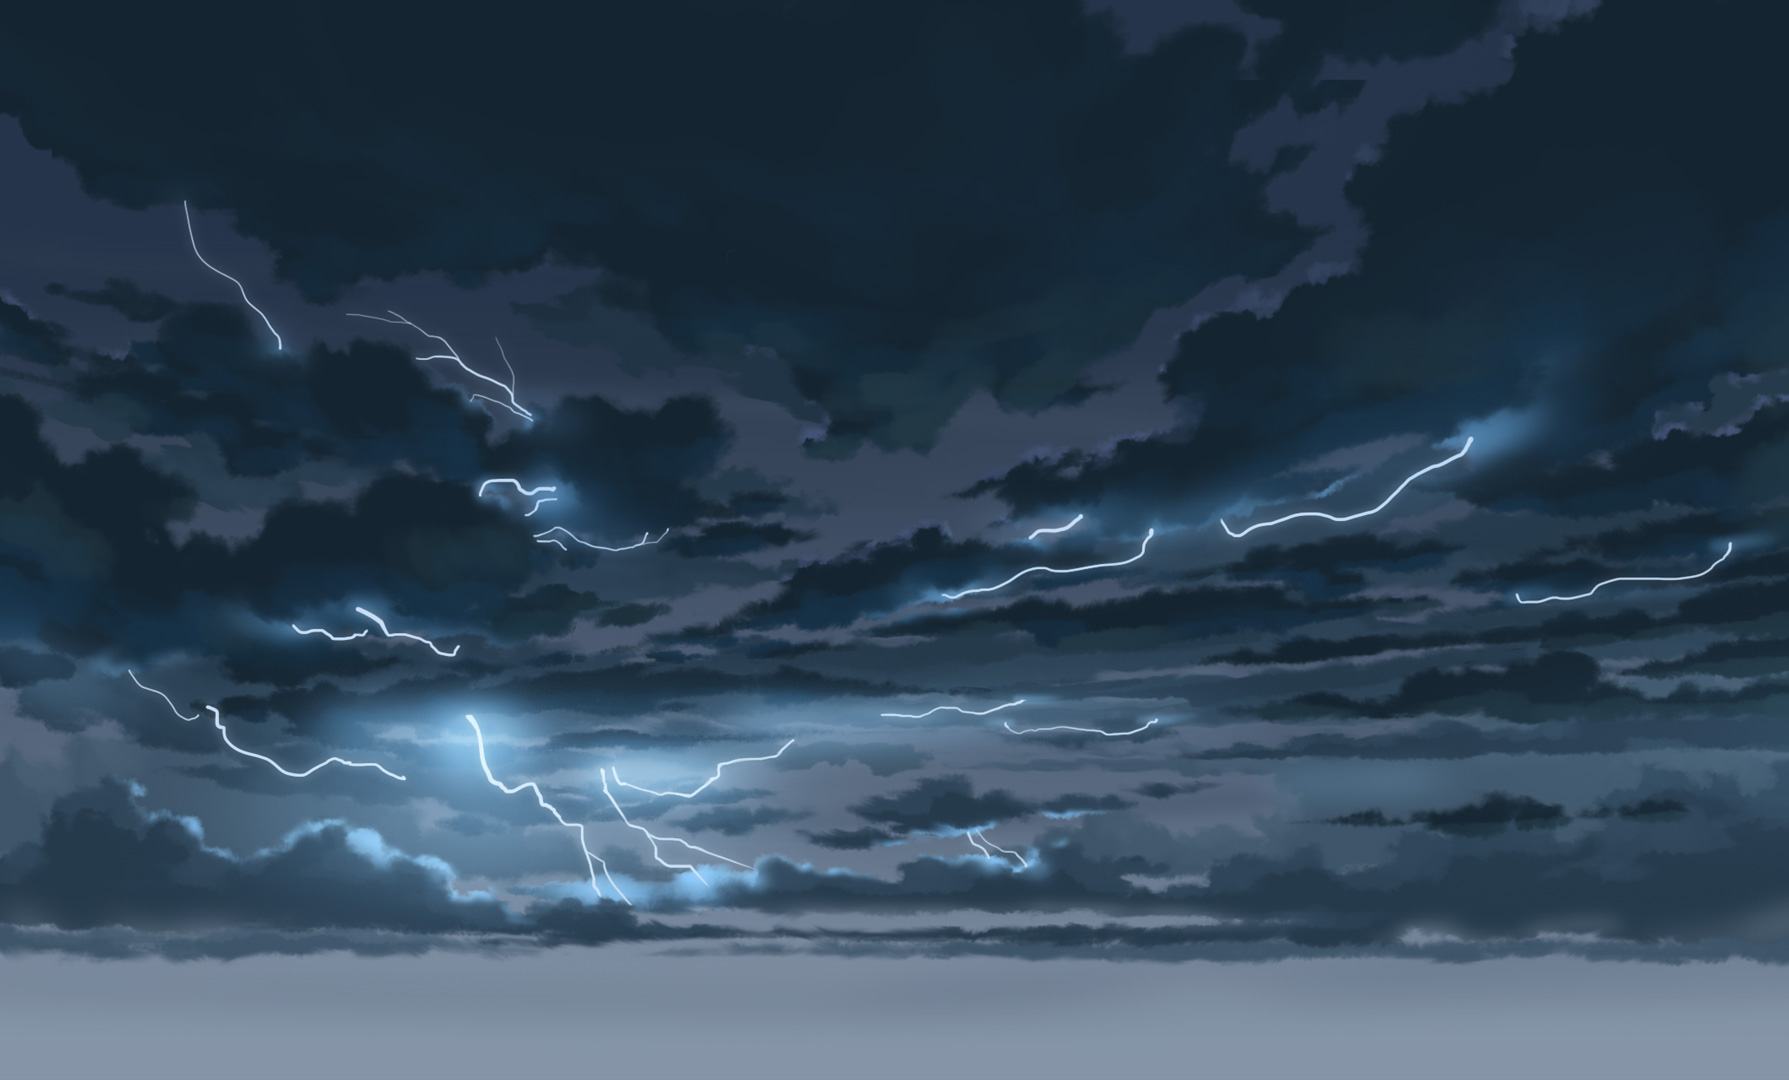 The Storm Warriors - Halcyon Realms - Art Book Reviews - Anime, Manga,  Film, Photography